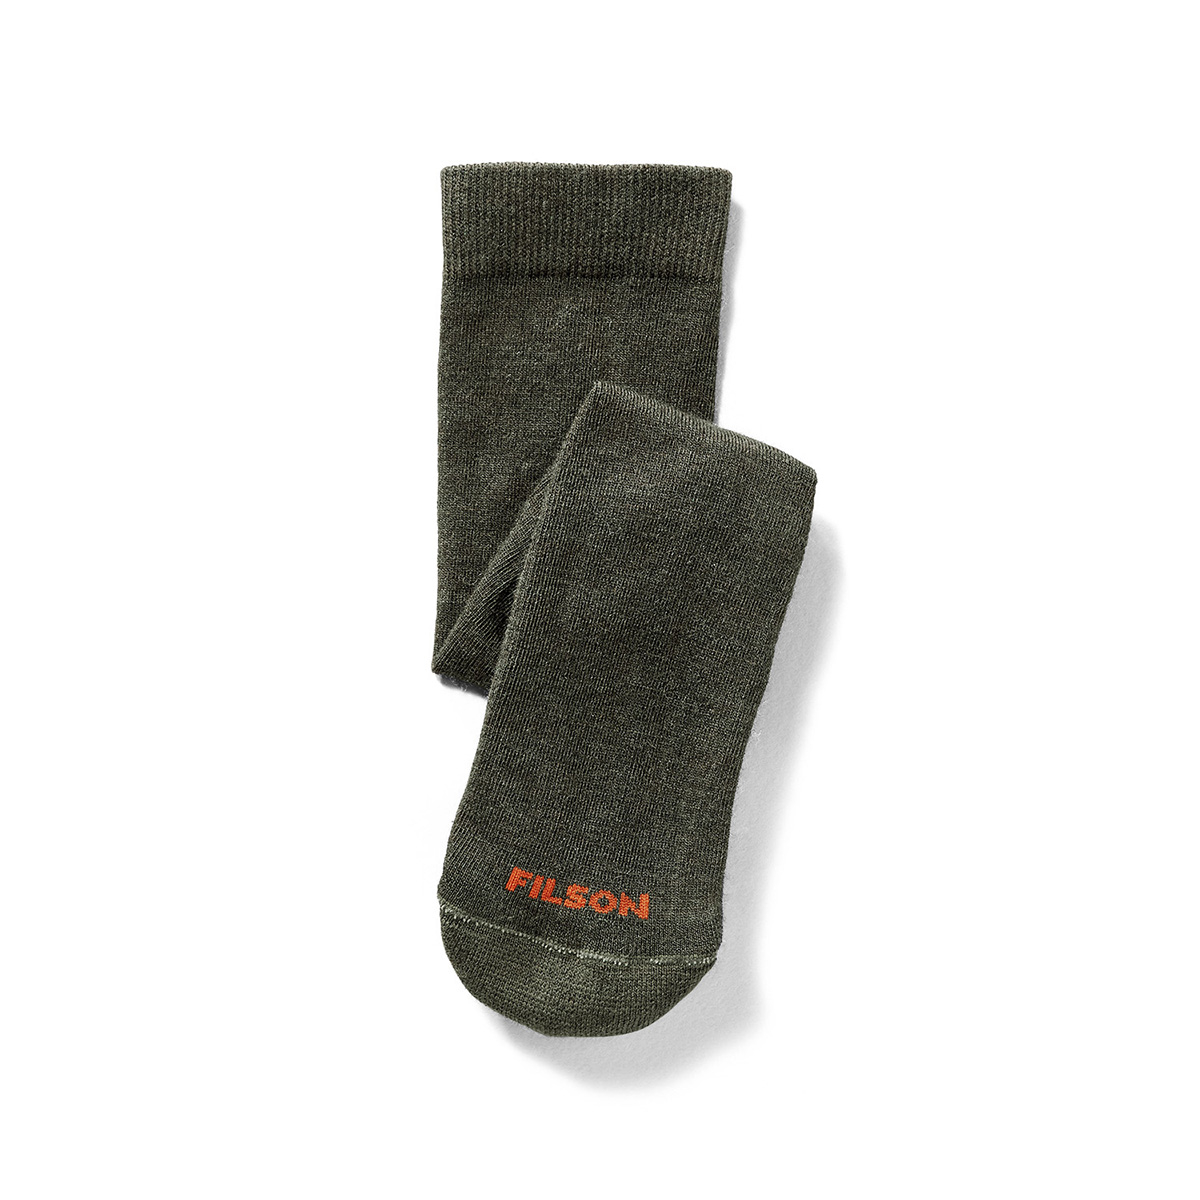 Filson Everyday Crew Sock Green. Versatile, midweight socks made of a merino wool blend